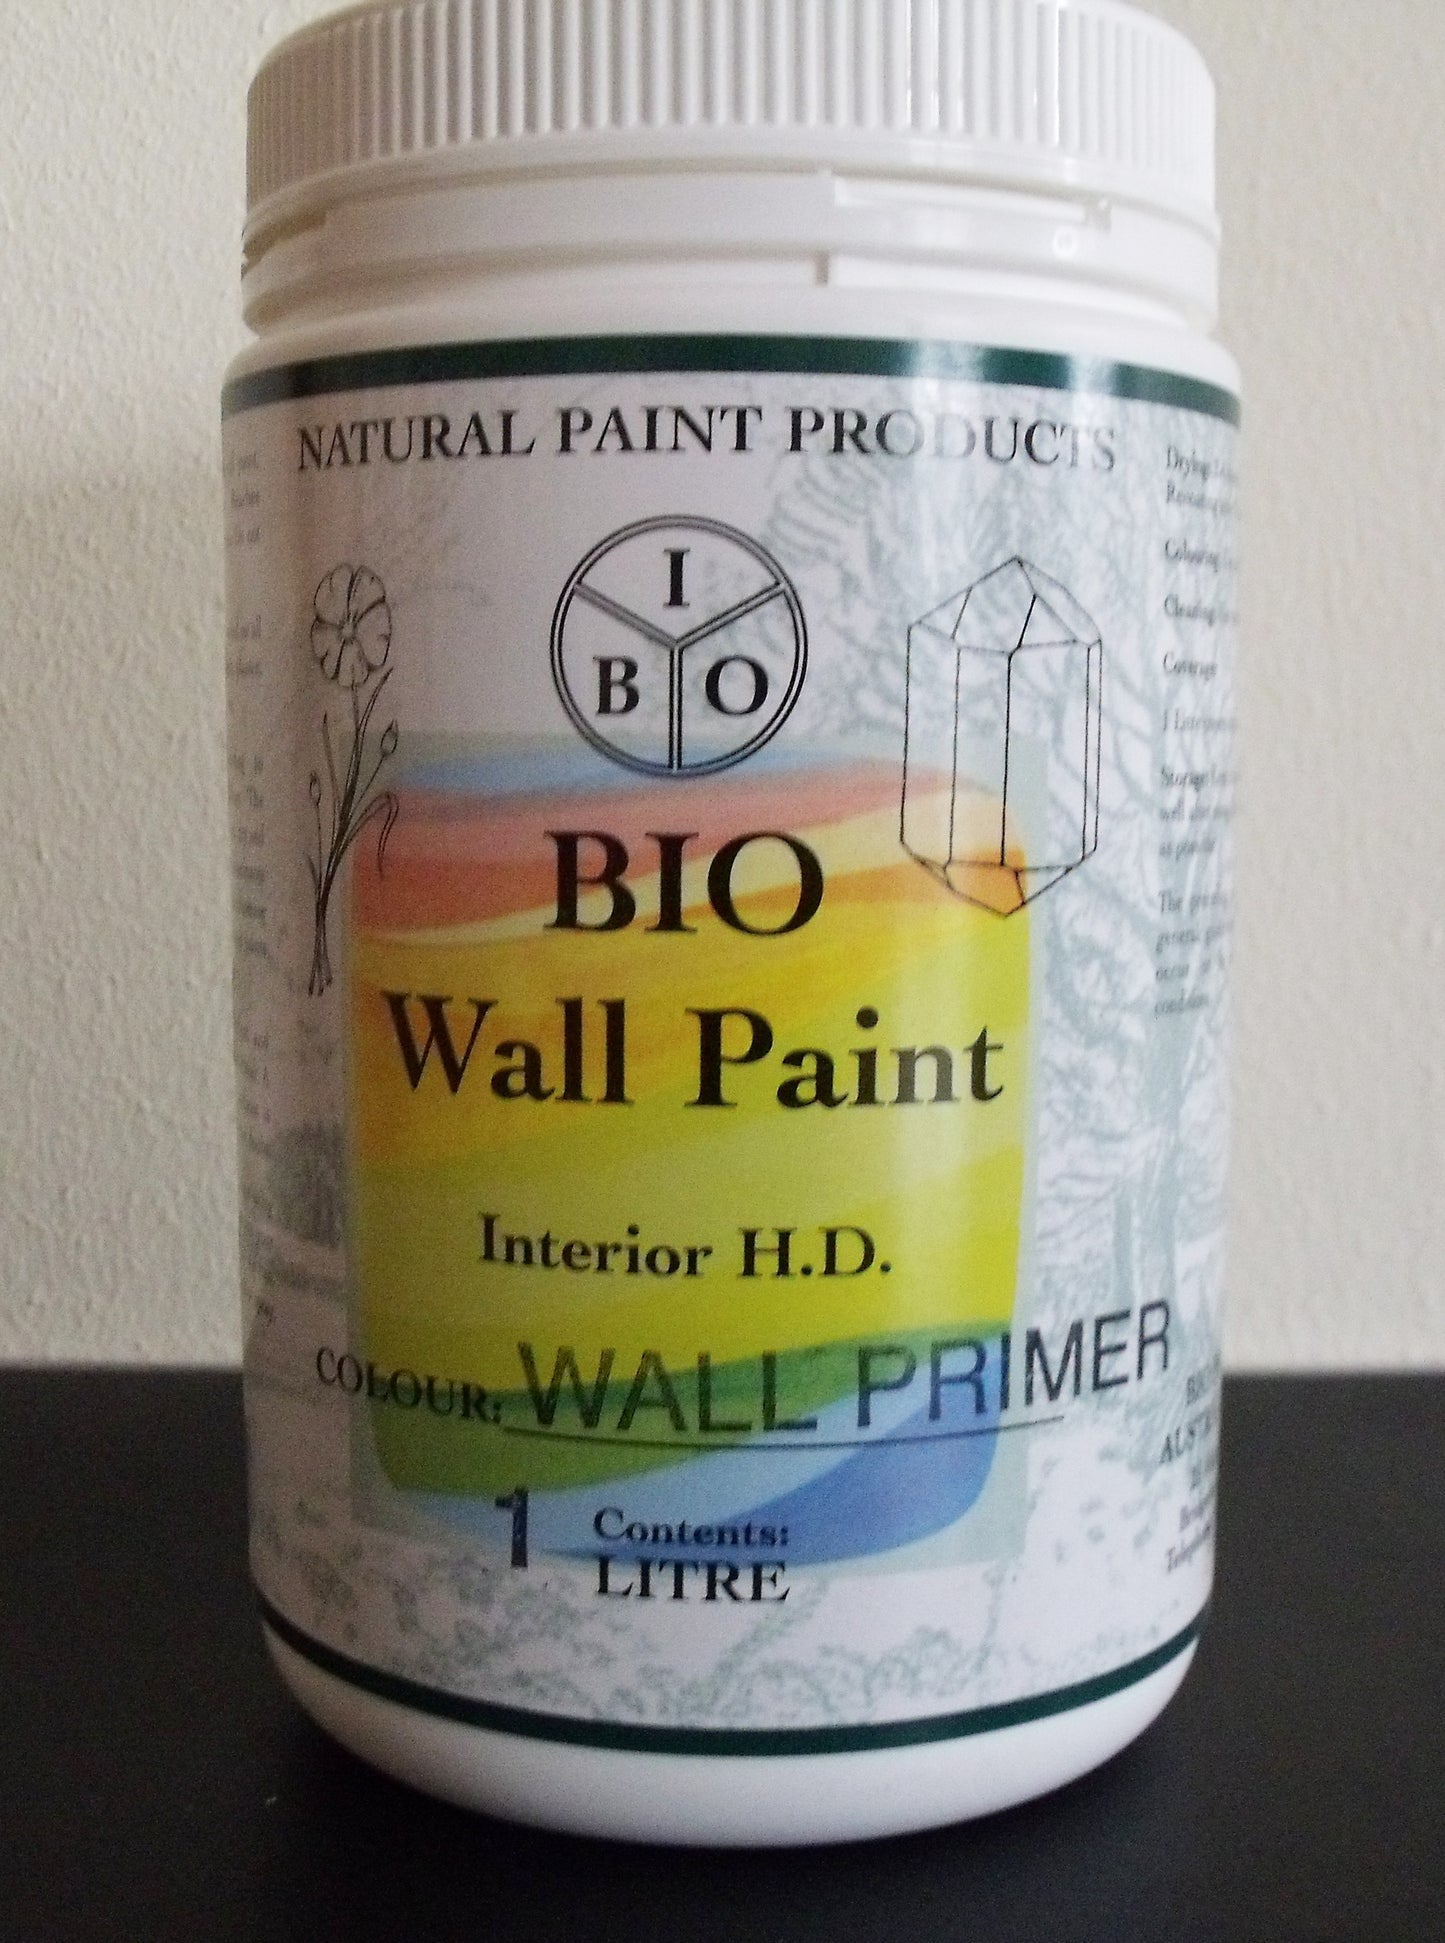 Bio Wall Paint